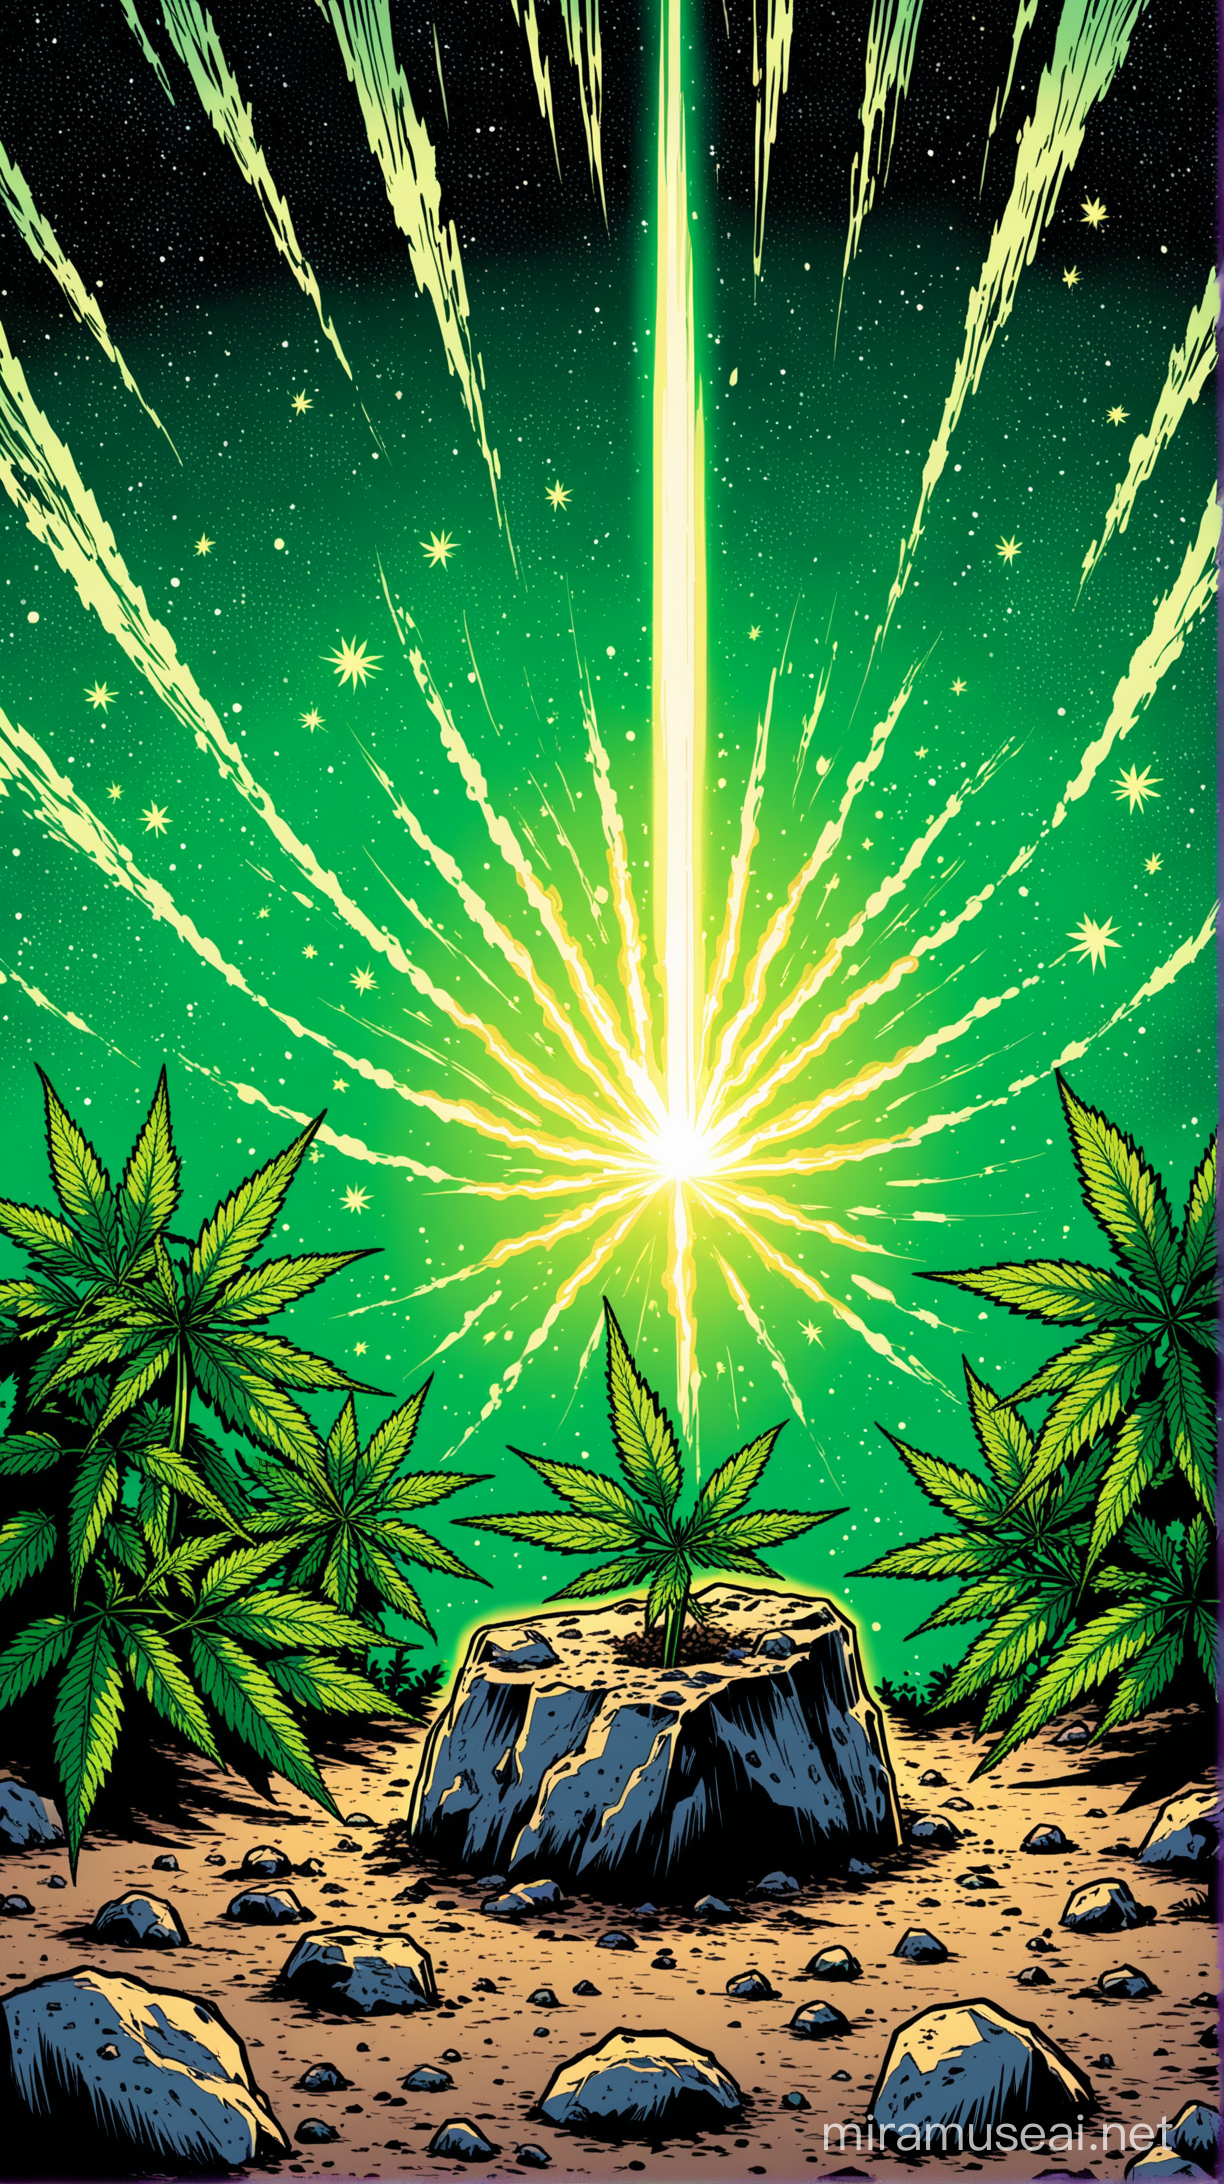 Cosmic Energy Illuminated Marijuana Patch Comic Book Style Art